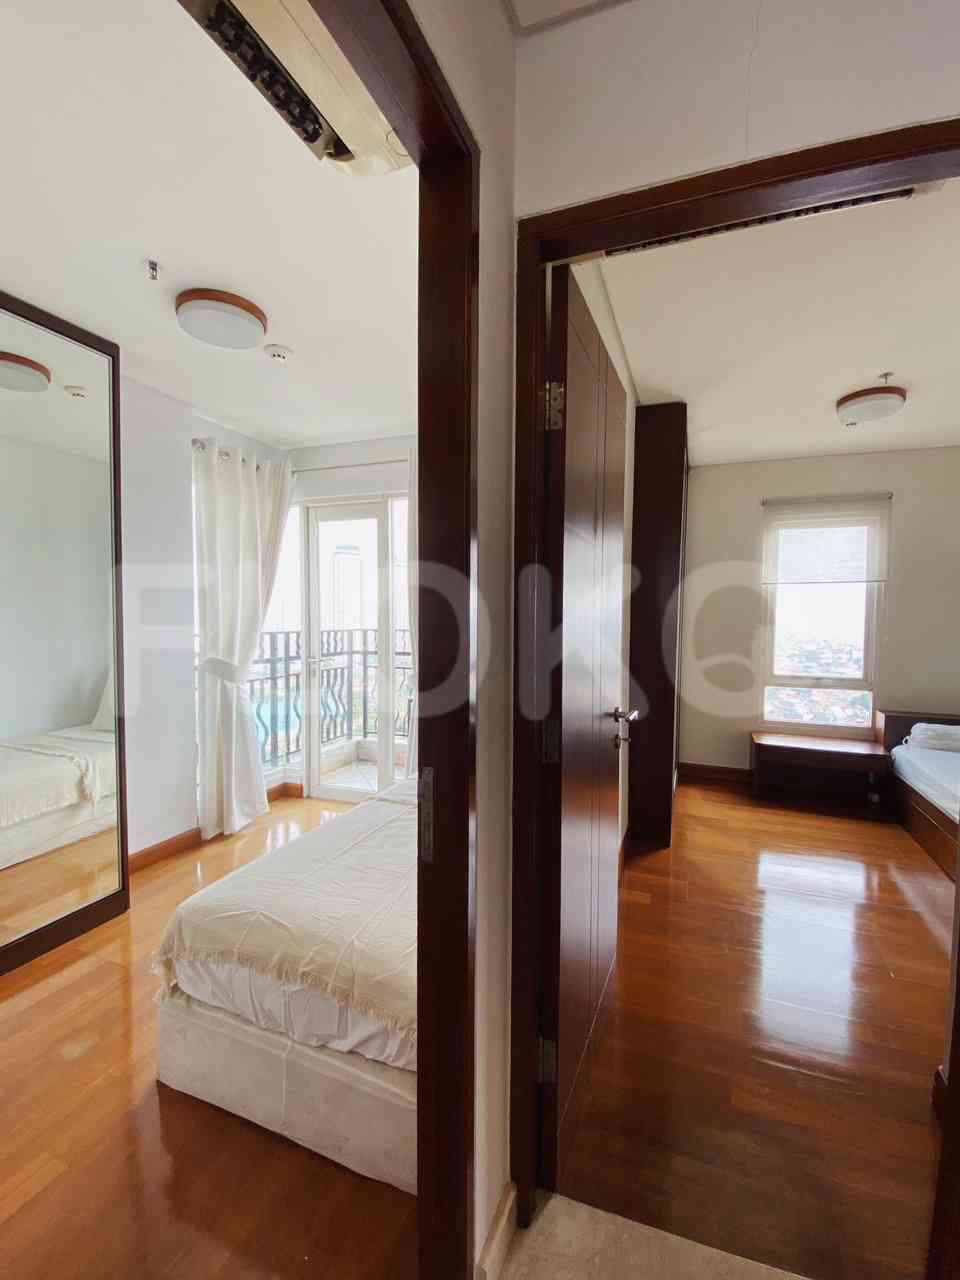 4 Bedroom on 26th Floor for Rent in Permata Hijau Suites Apartment - fpef10 11